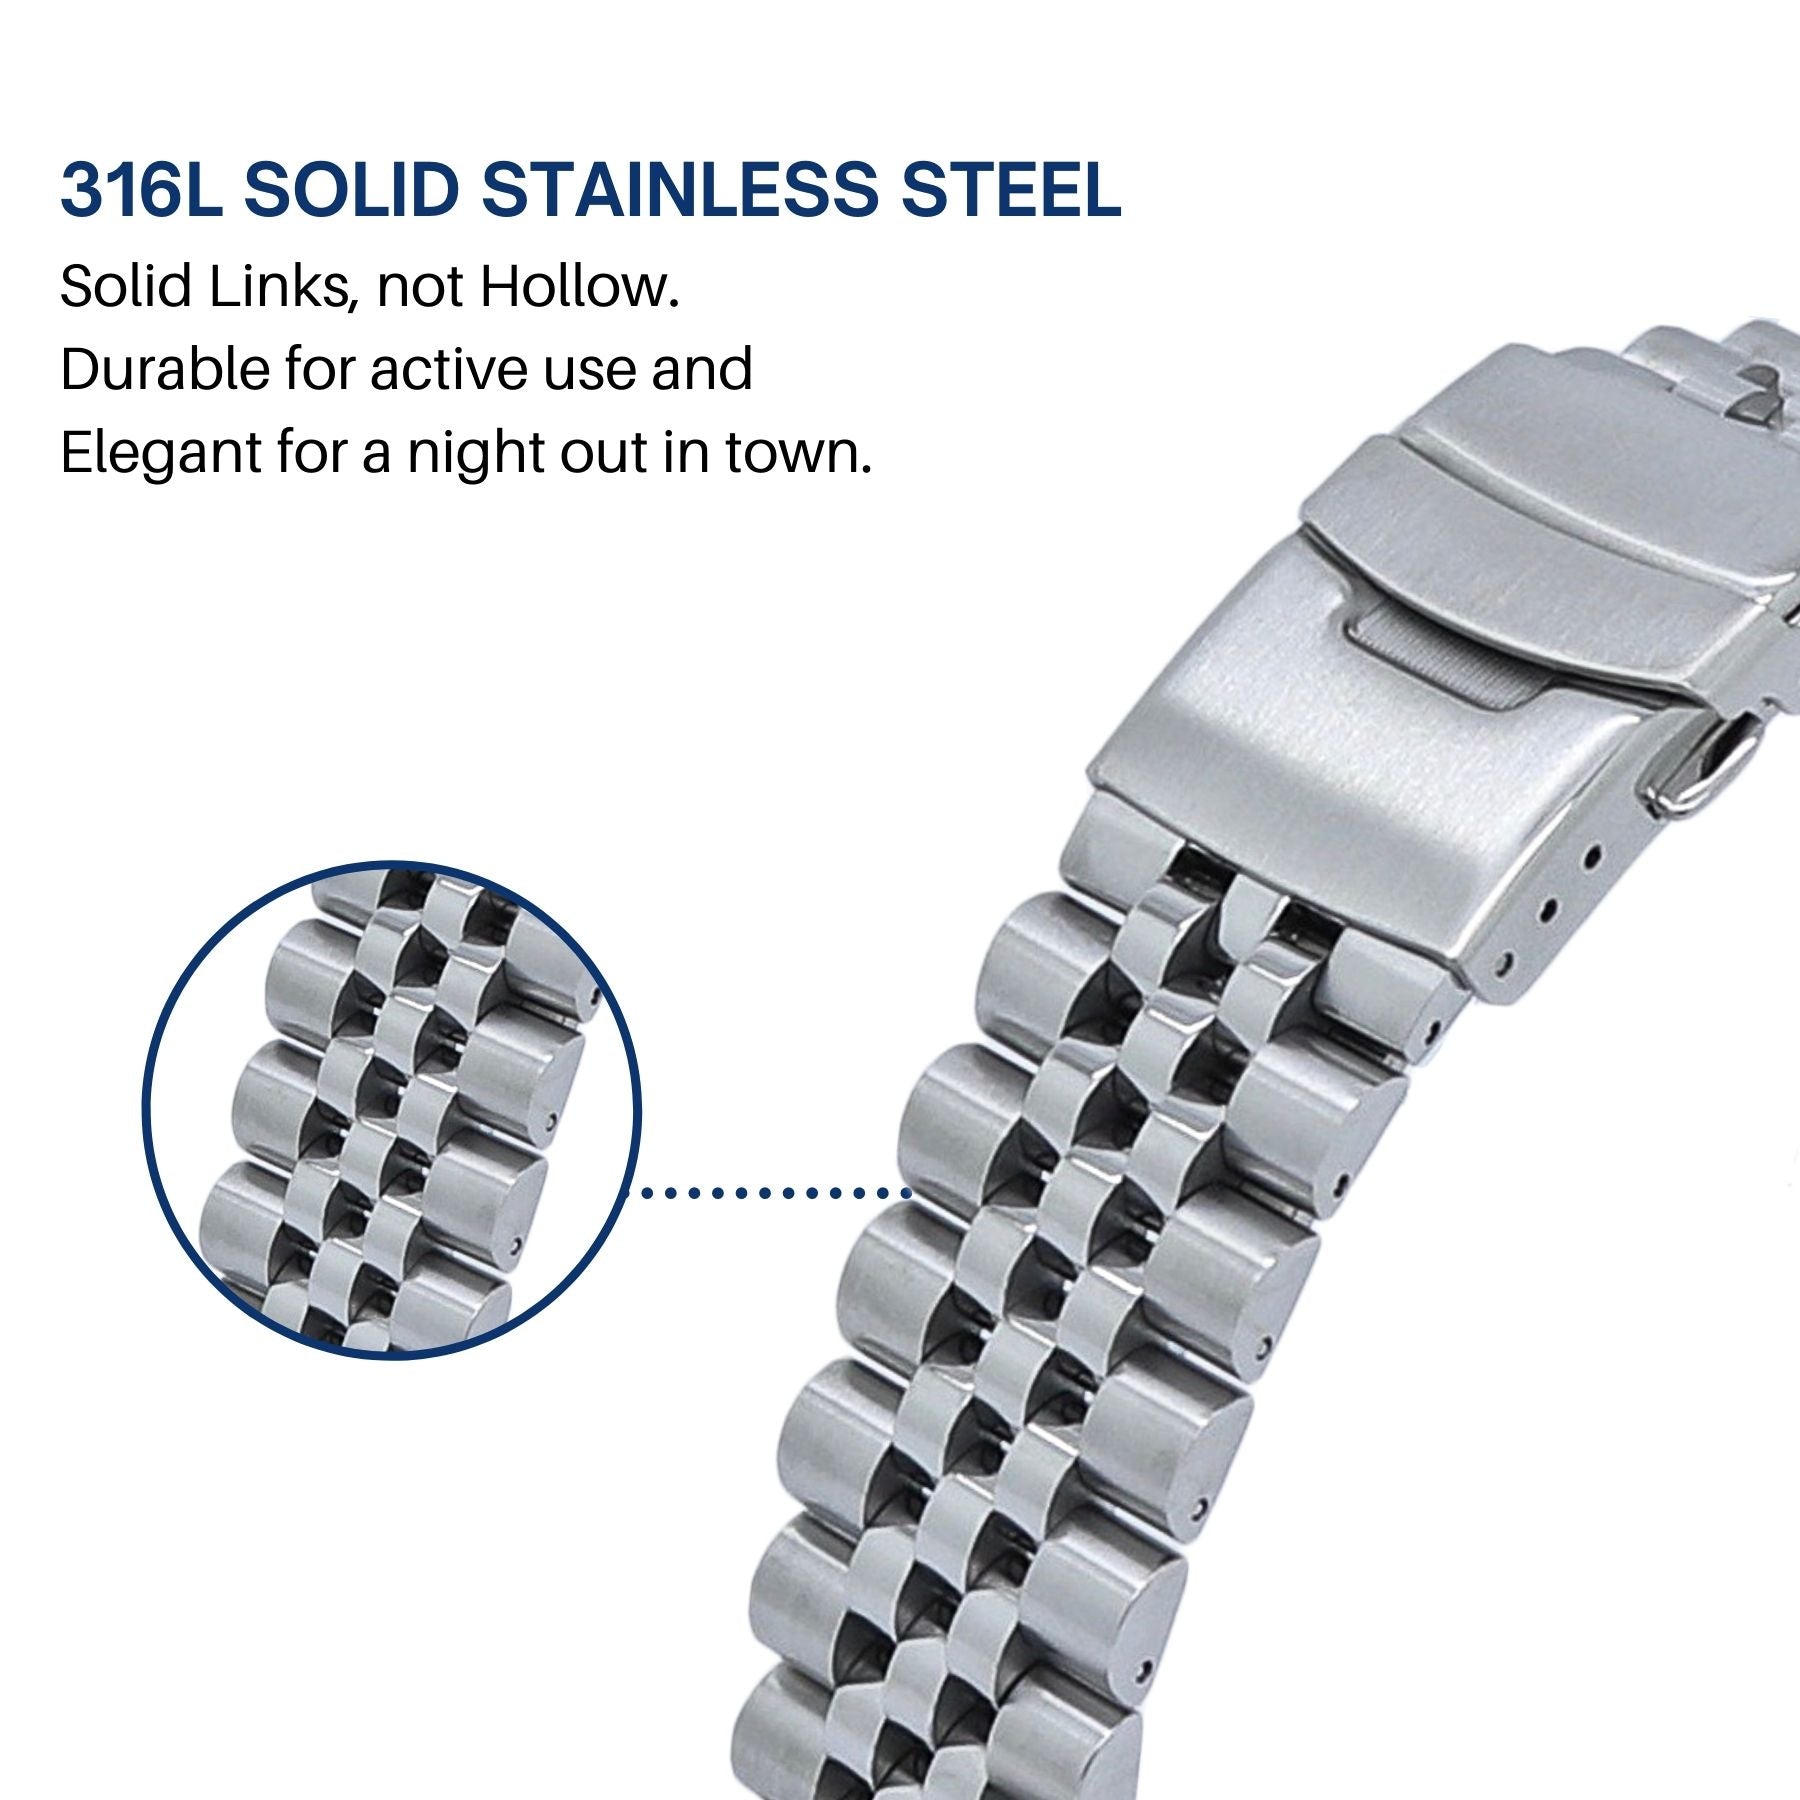 22mm Jubilee Steel Watch Band For Orient Kamasu RA-AA0004E19A RA